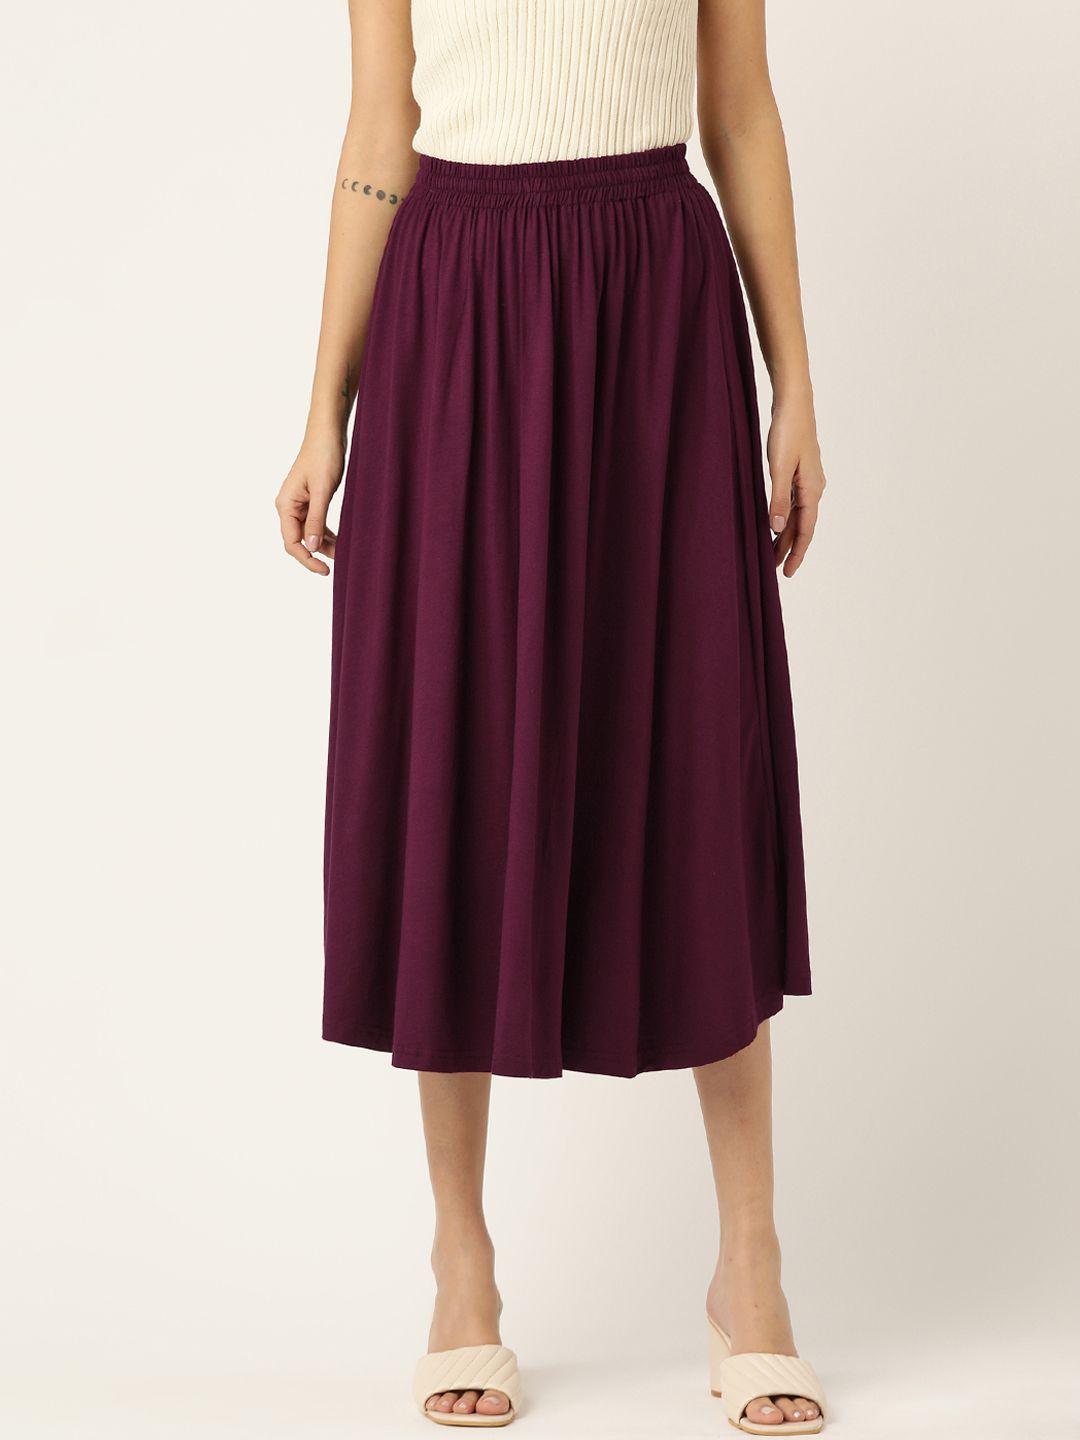 brinns women burgundy solid a-line skirt